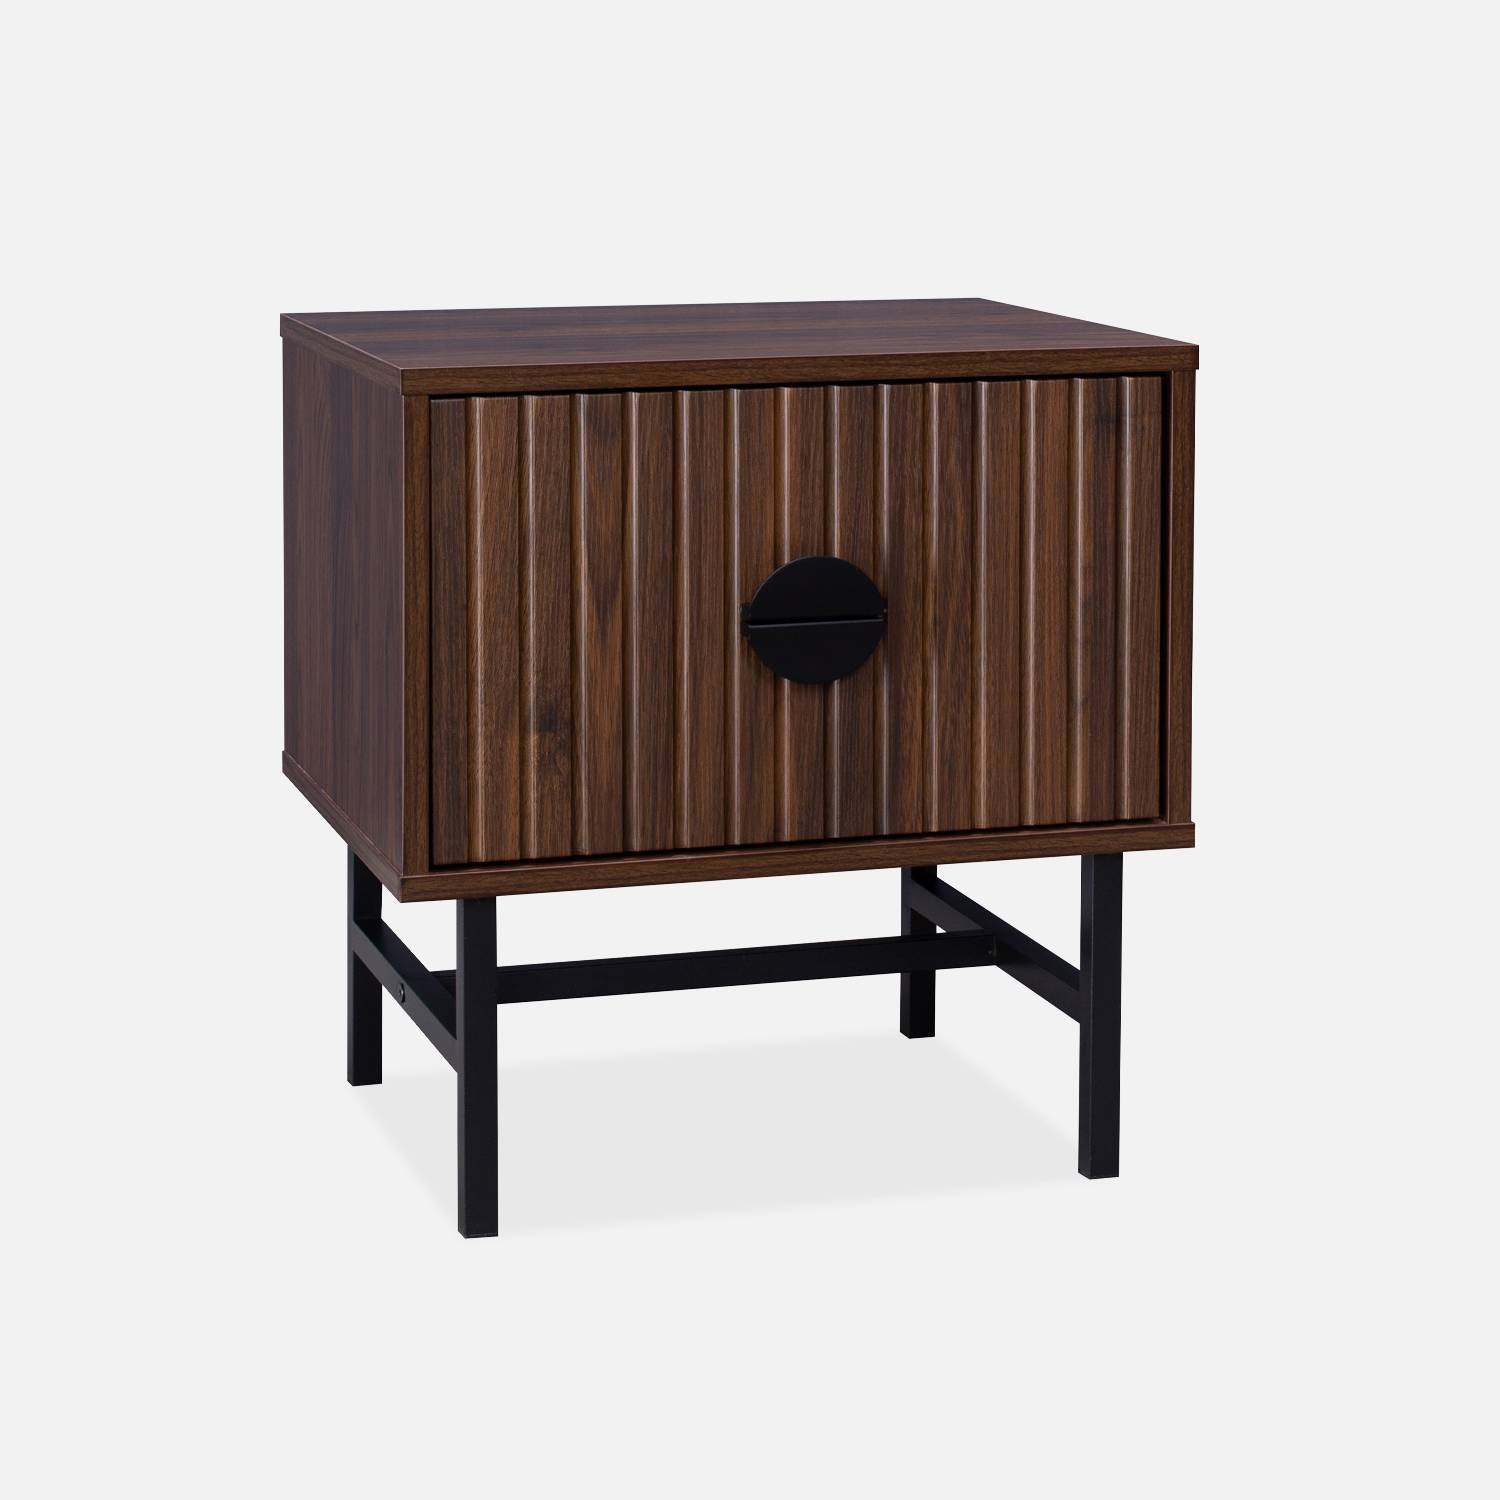 Dark wood effect bedside table, grooved wood decor | sweeek